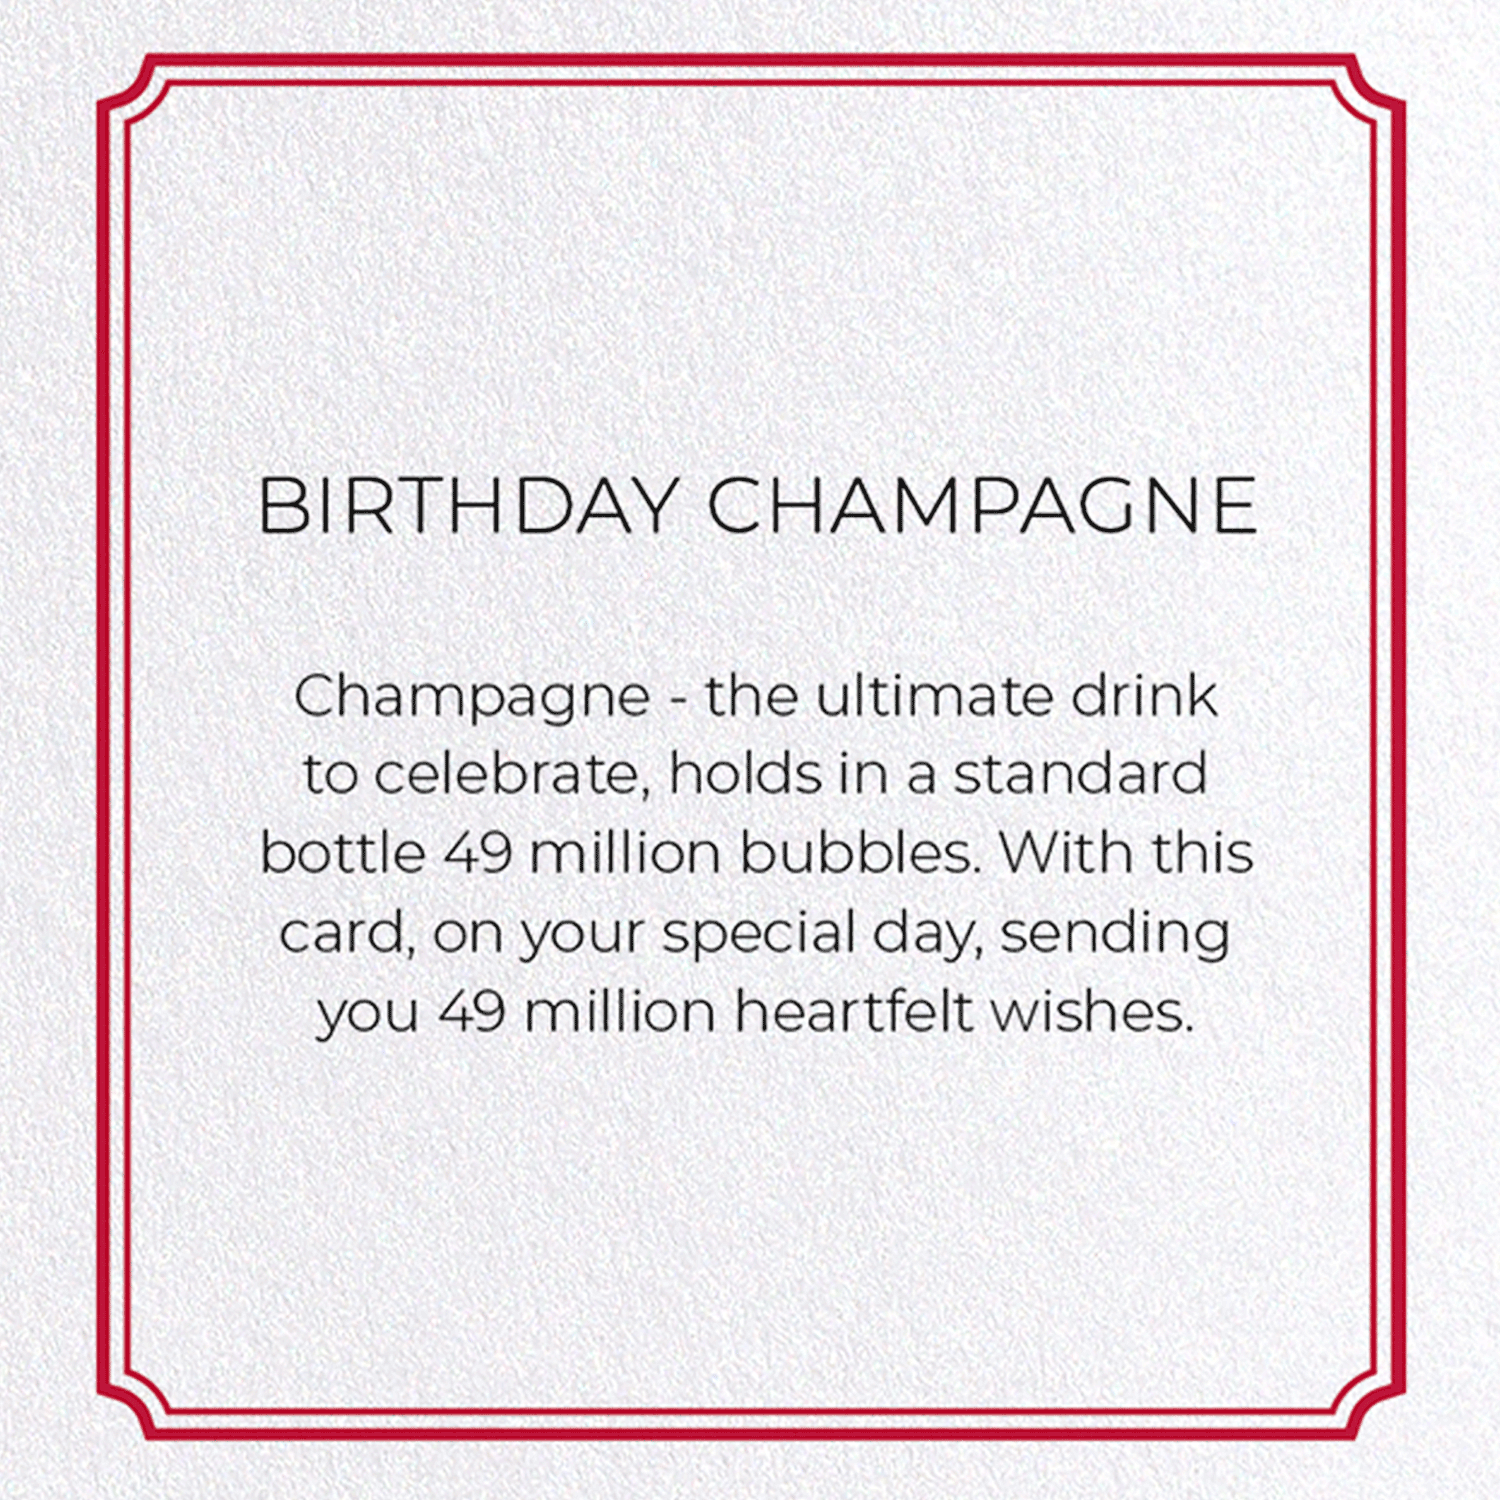 BIRTHDAY CHAMPAGNE: Vintage Greeting Card